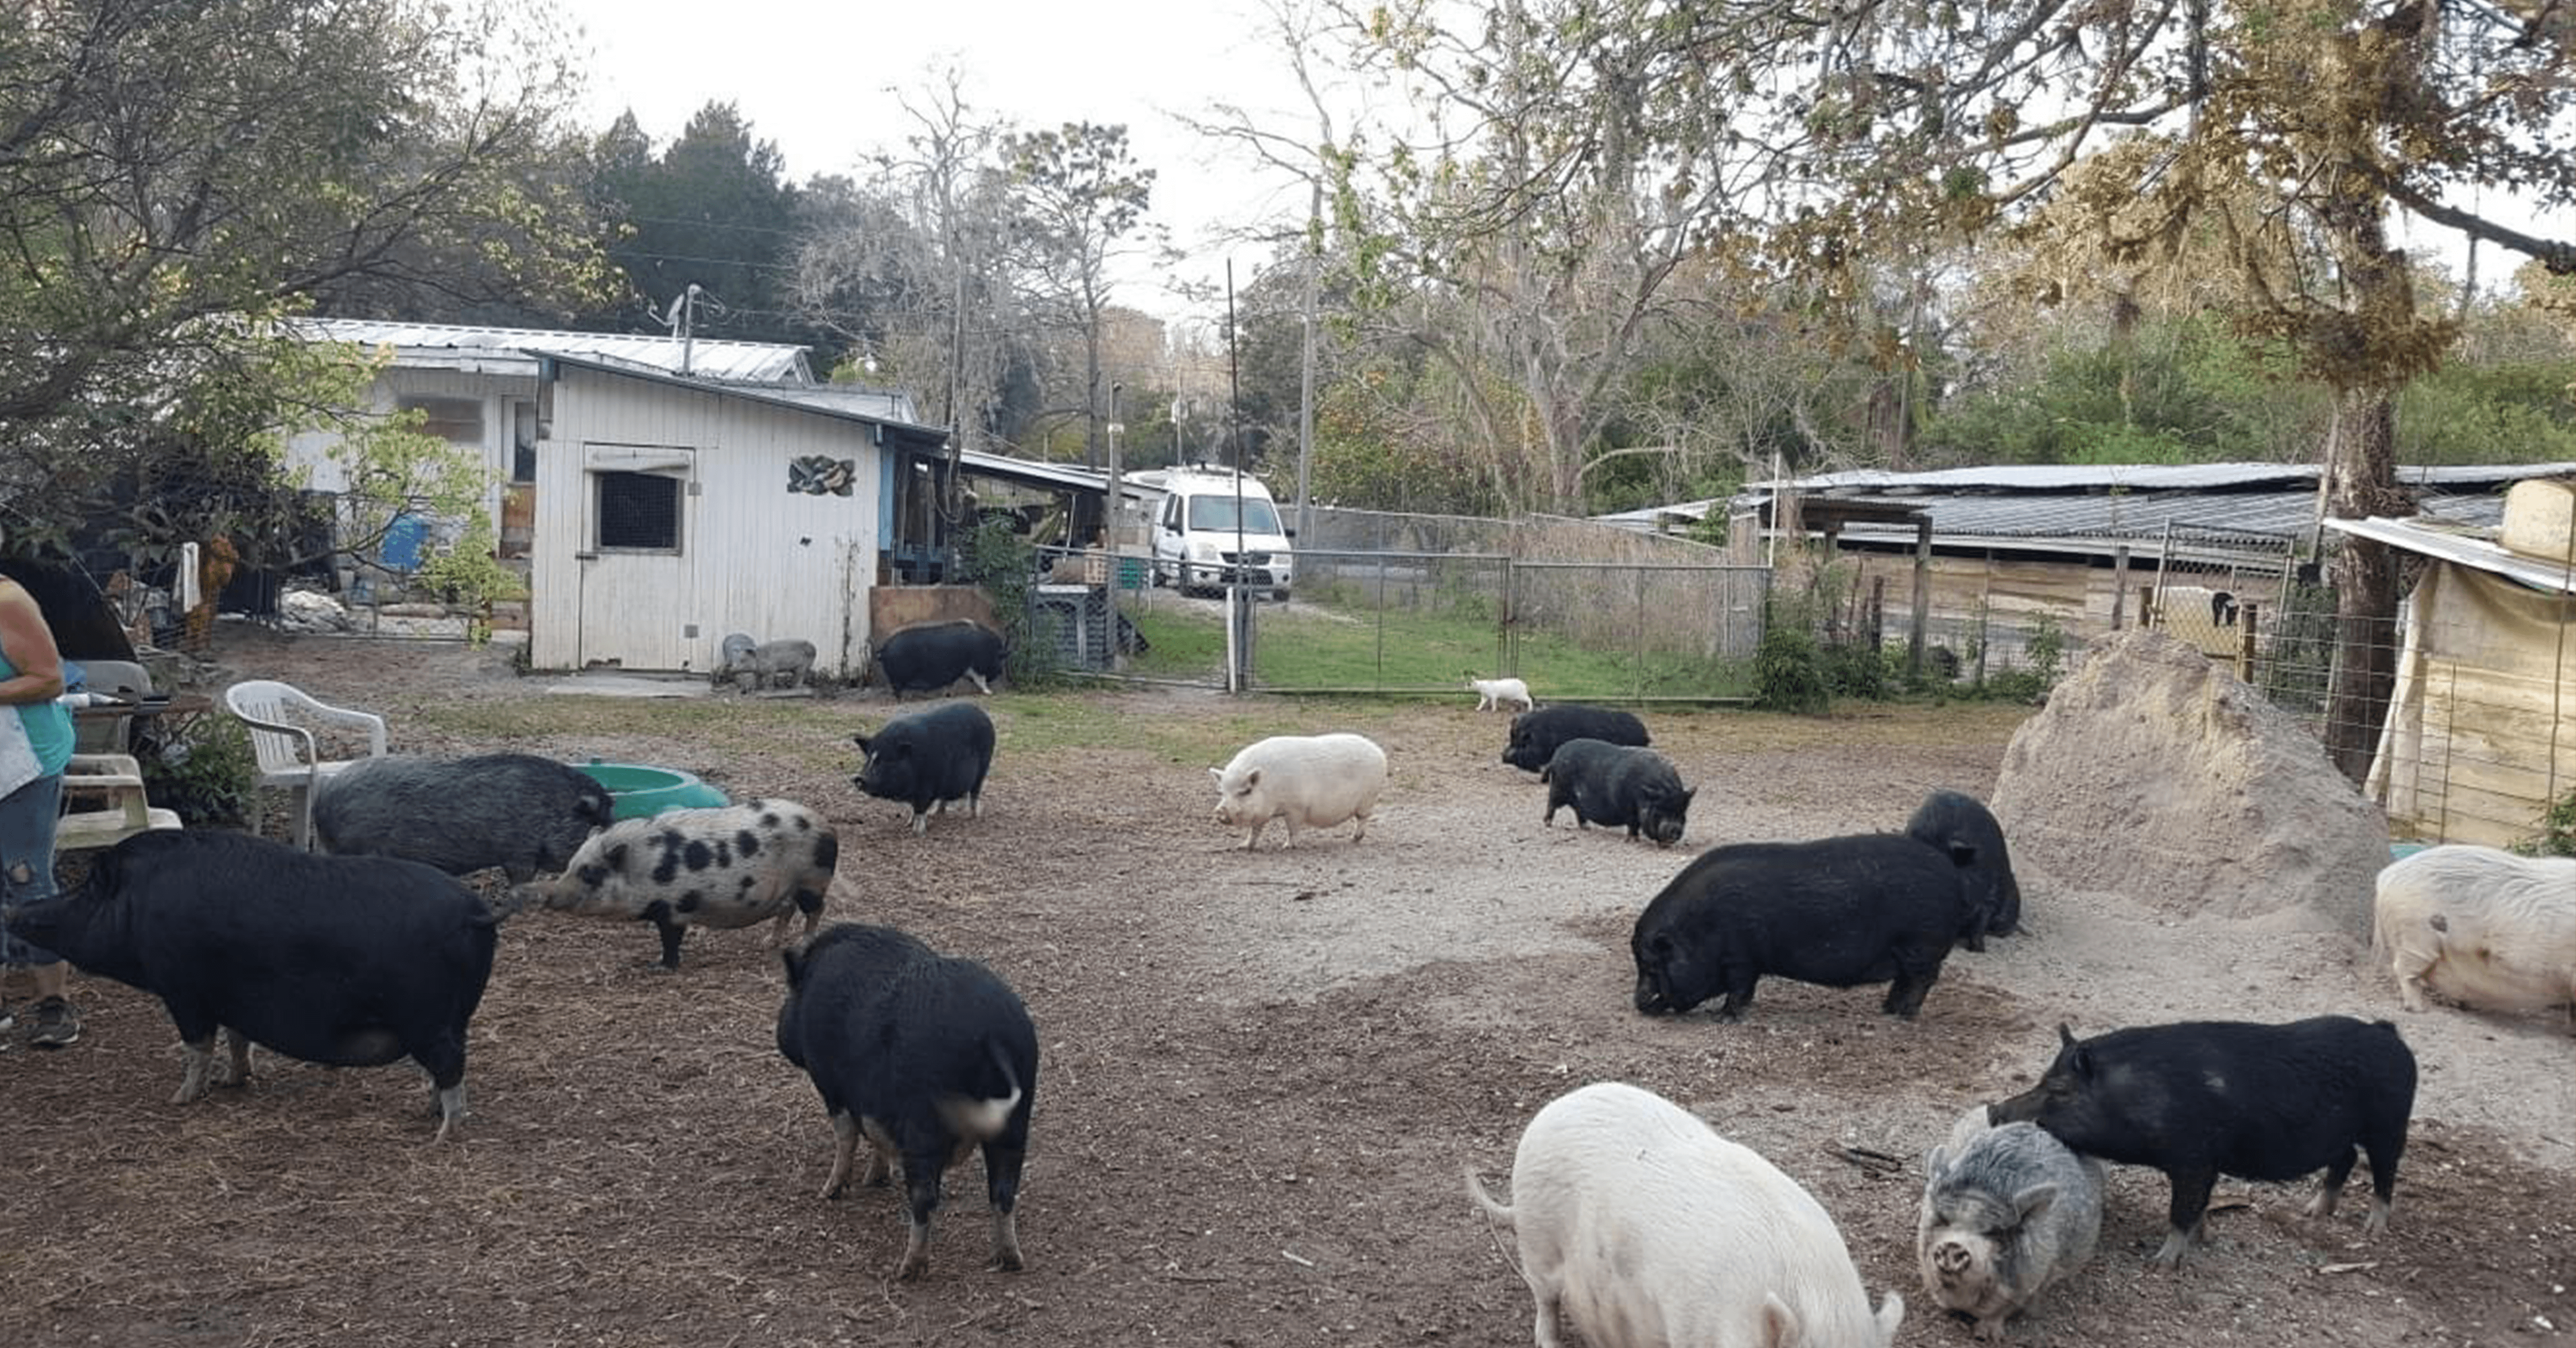 Noah’s Ark Potbelly Pig Sanctuary Inc